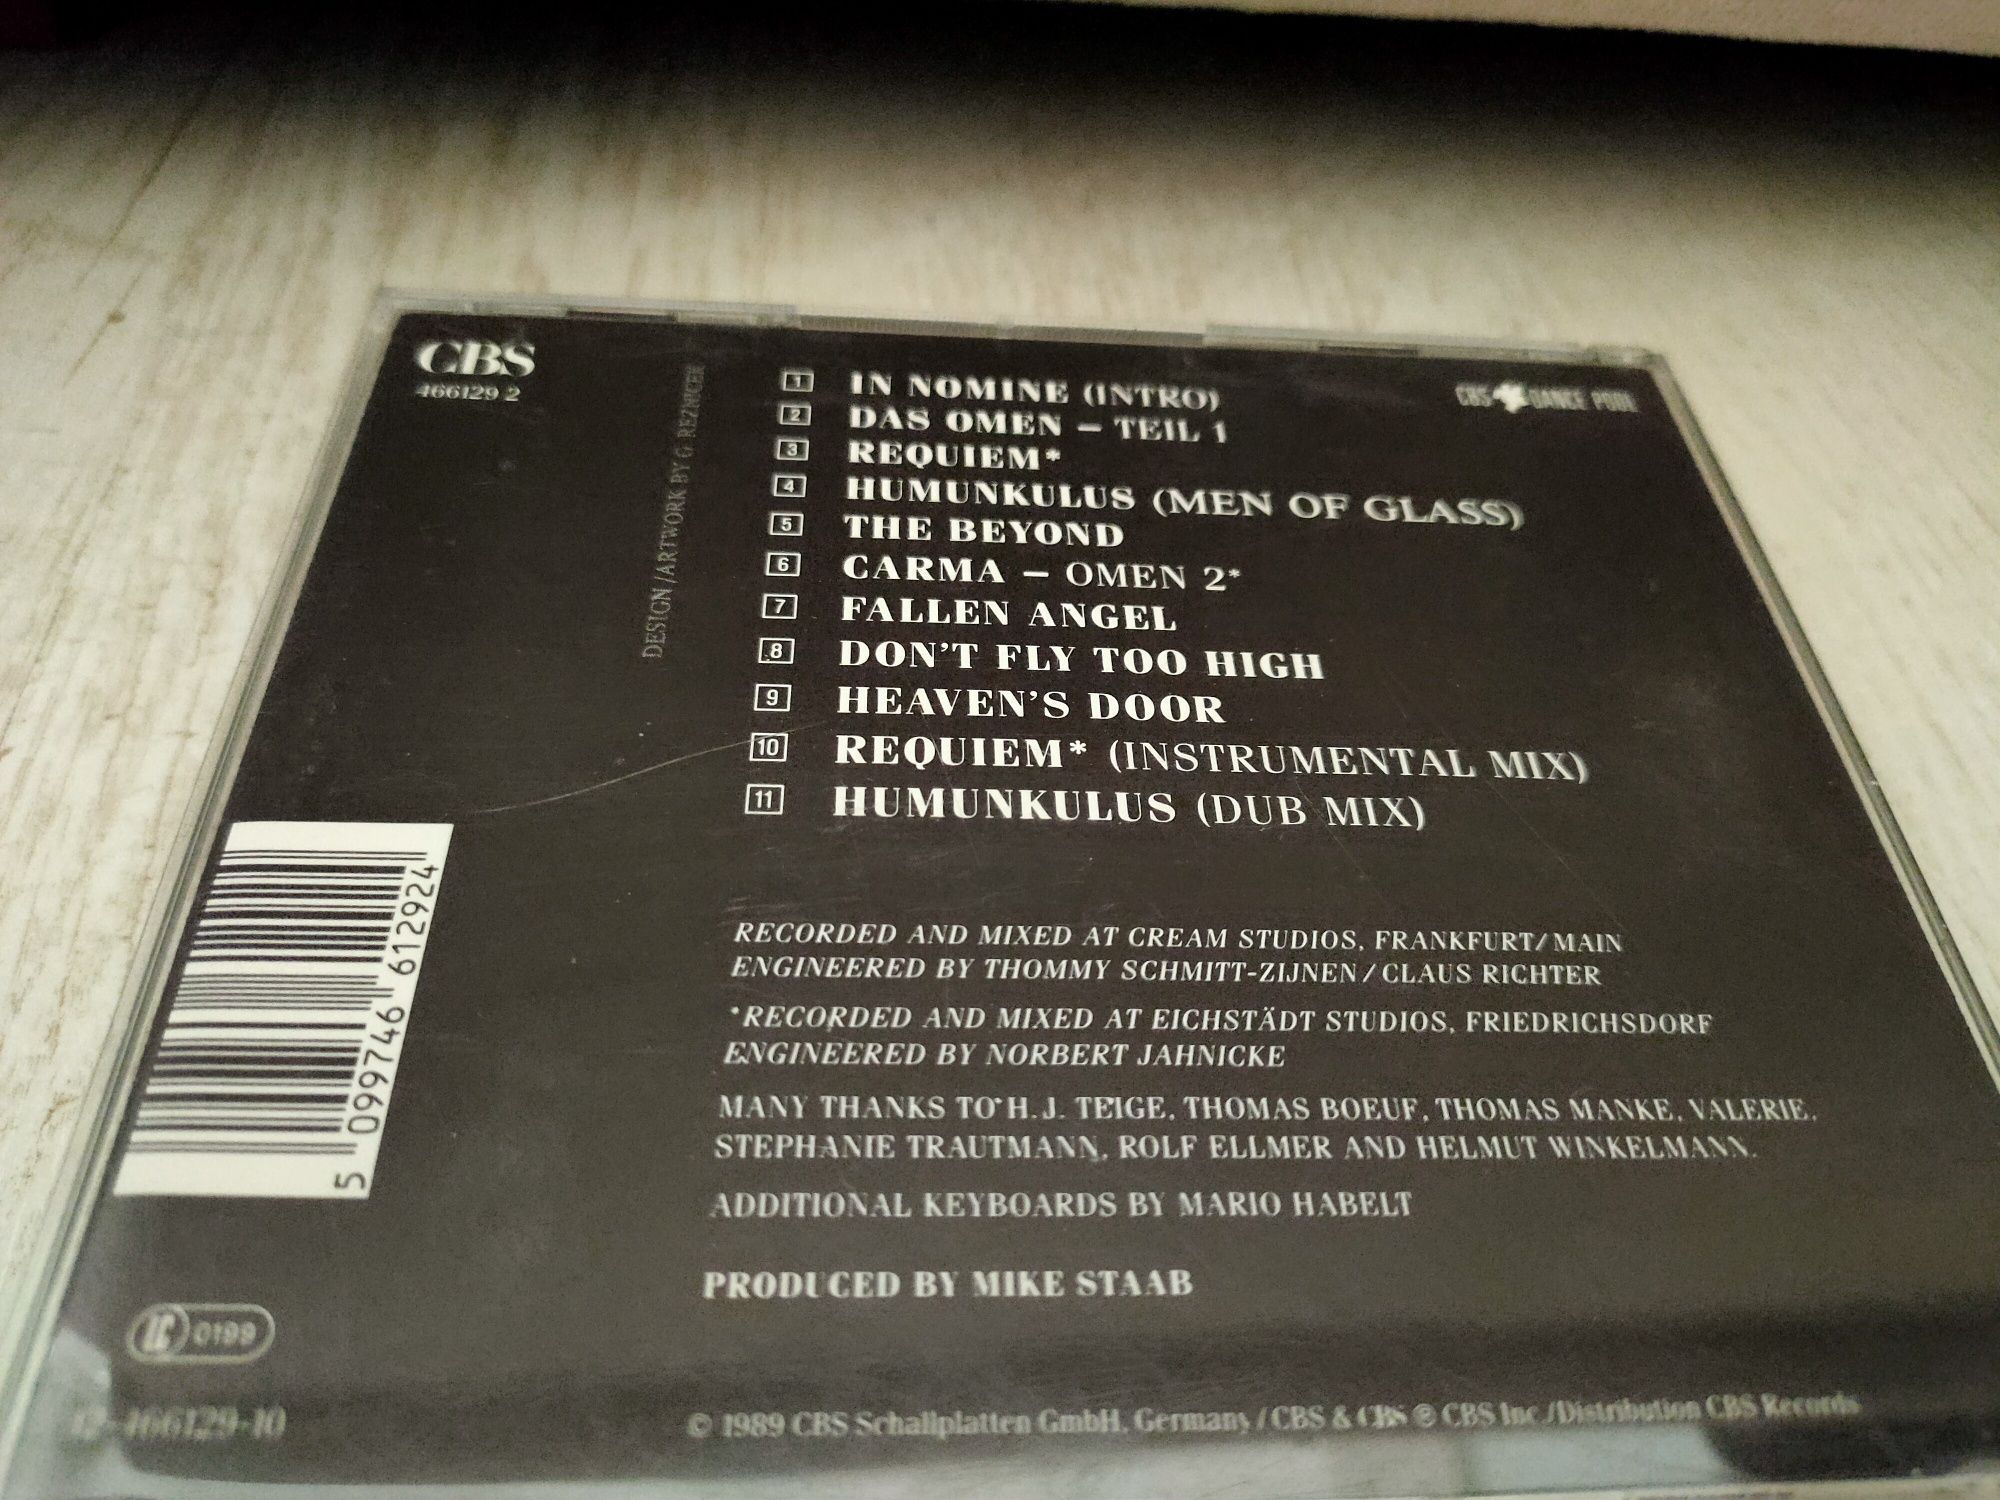 Płyta CD mix 6 sztuk Jennifer Rush i inne.